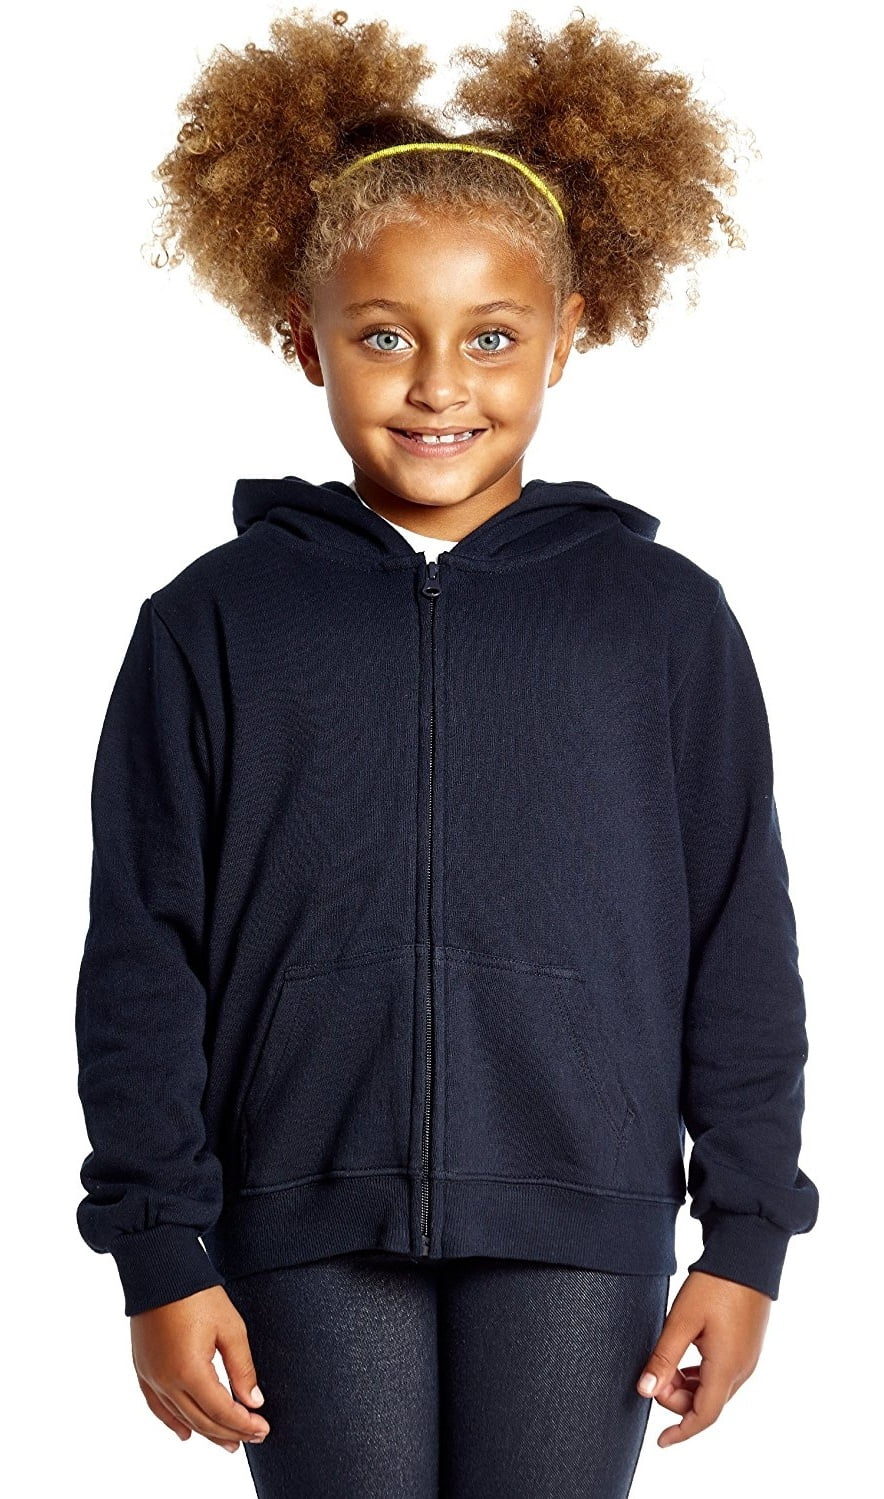 Variety of Colors Leveret Kids & Toddler Hoodie Boys Girls 100% Cotton Zip-Up Hoodie Jacket 2-14 Years